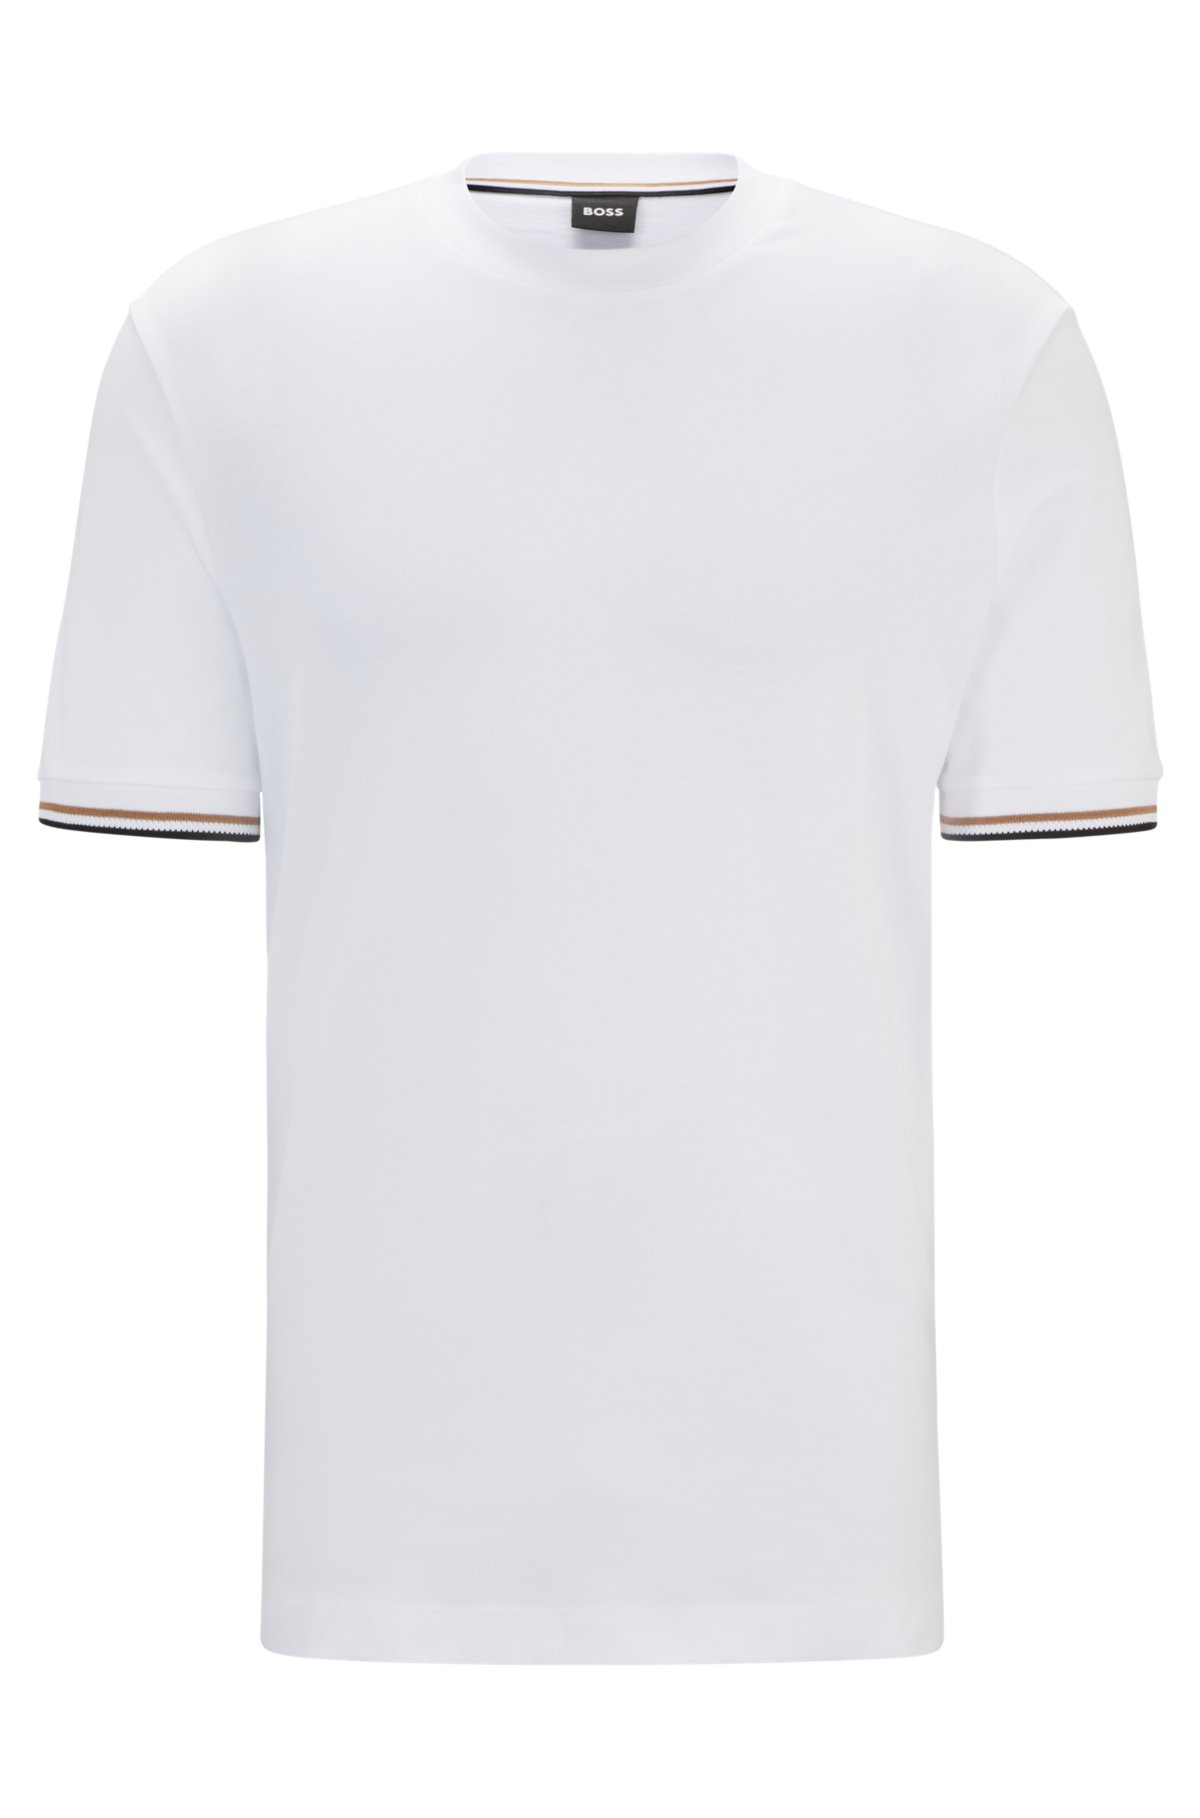 Cotton-jersey T-shirt with signature-stripe cuffs, White